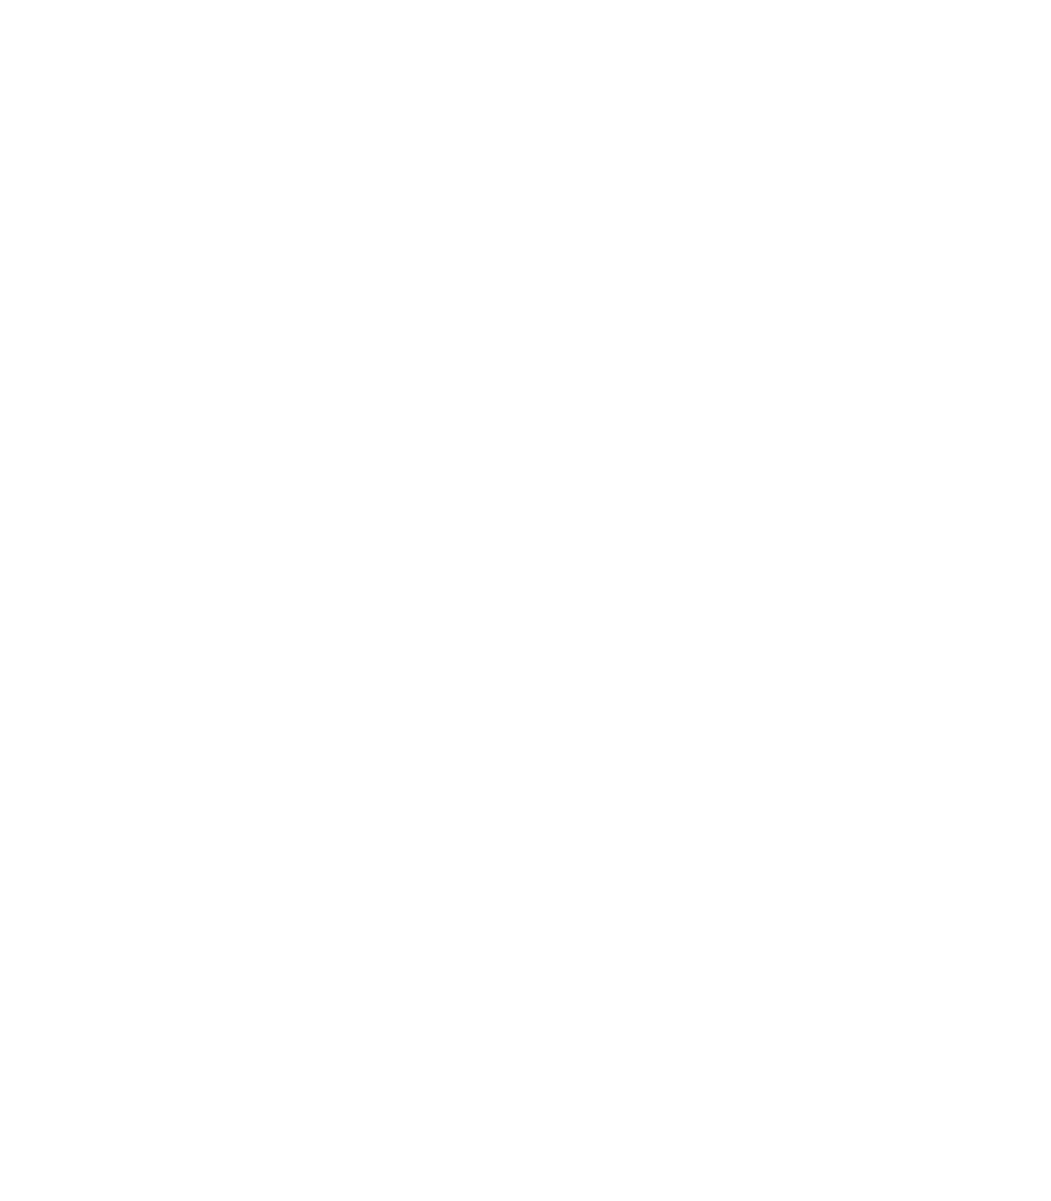 Apps Associates secondary client logo, white